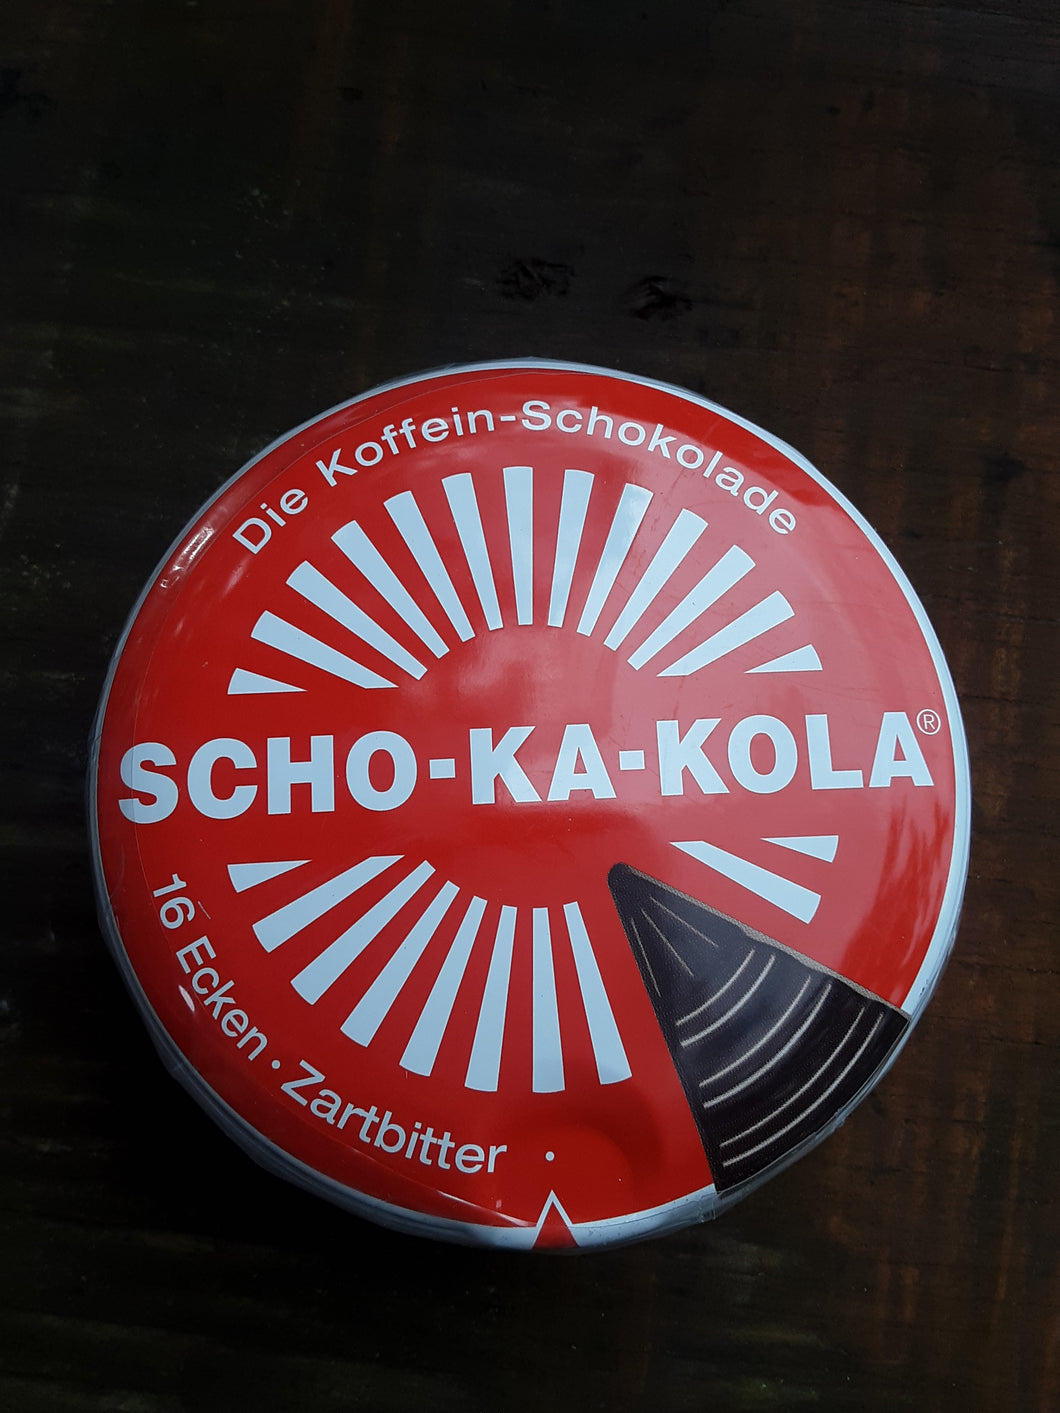 SCHO-KA-KOLA (dark chocolate)